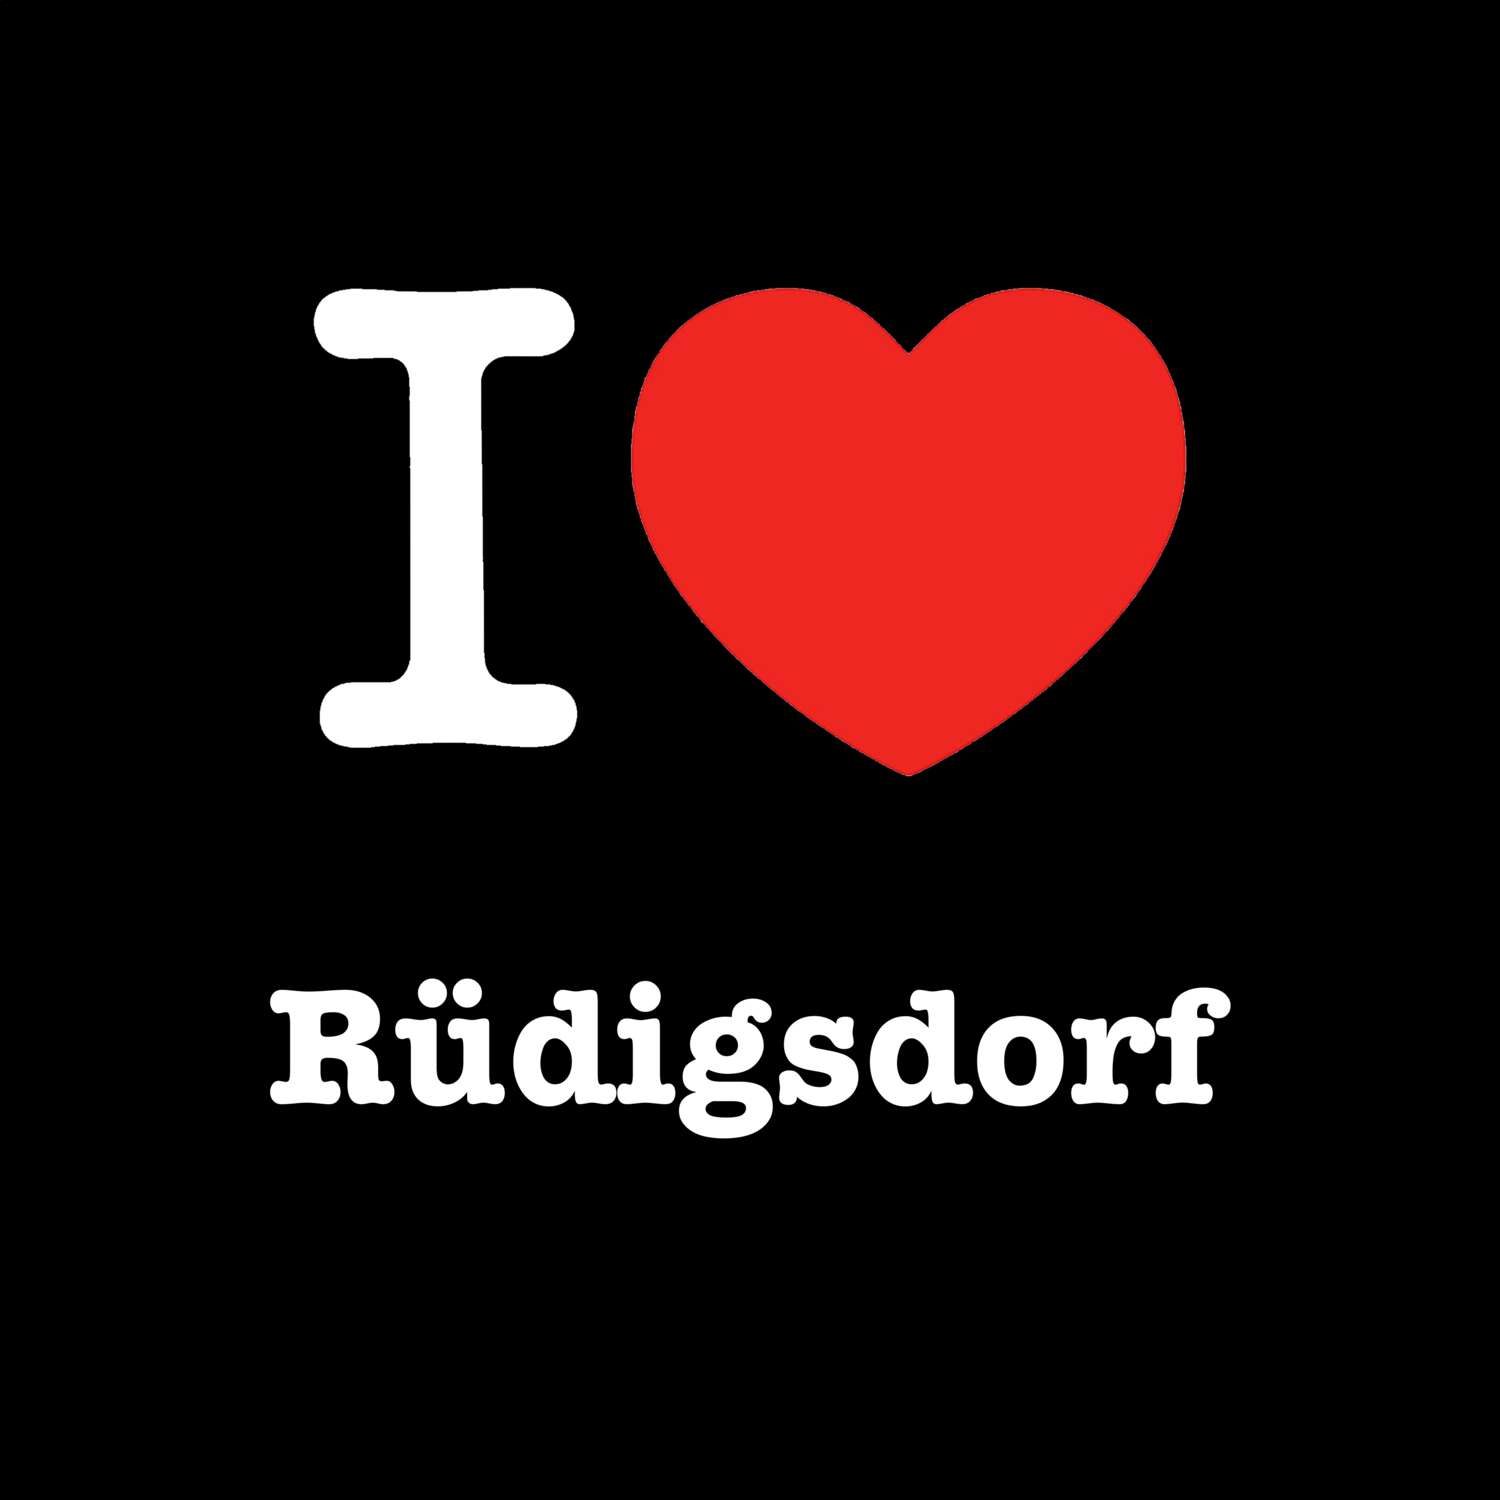 Rüdigsdorf T-Shirt »I love«